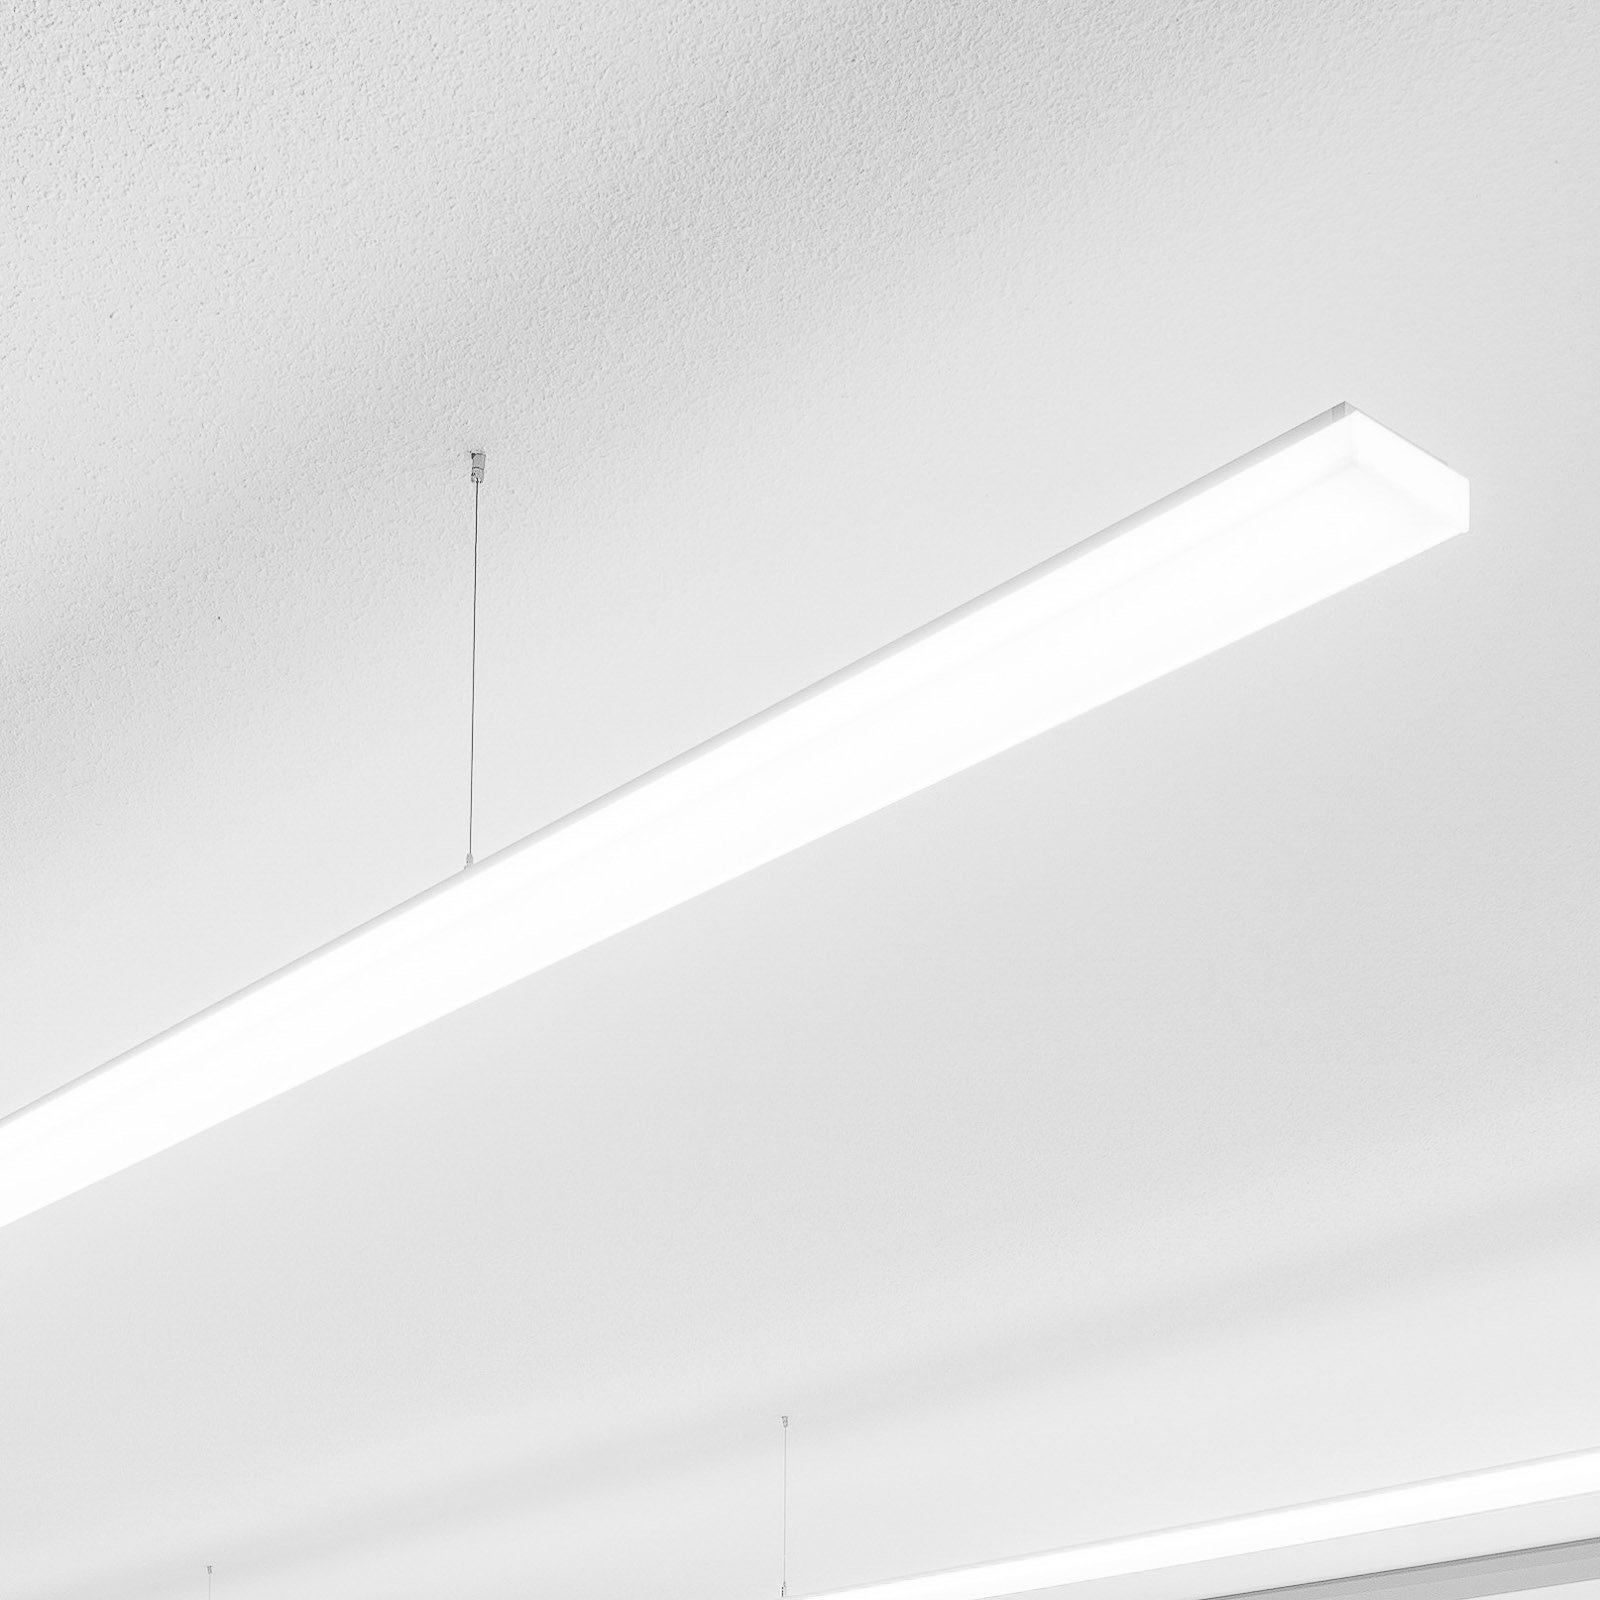 Regent Purelite Office svetlo strop 123,1cm 3000K